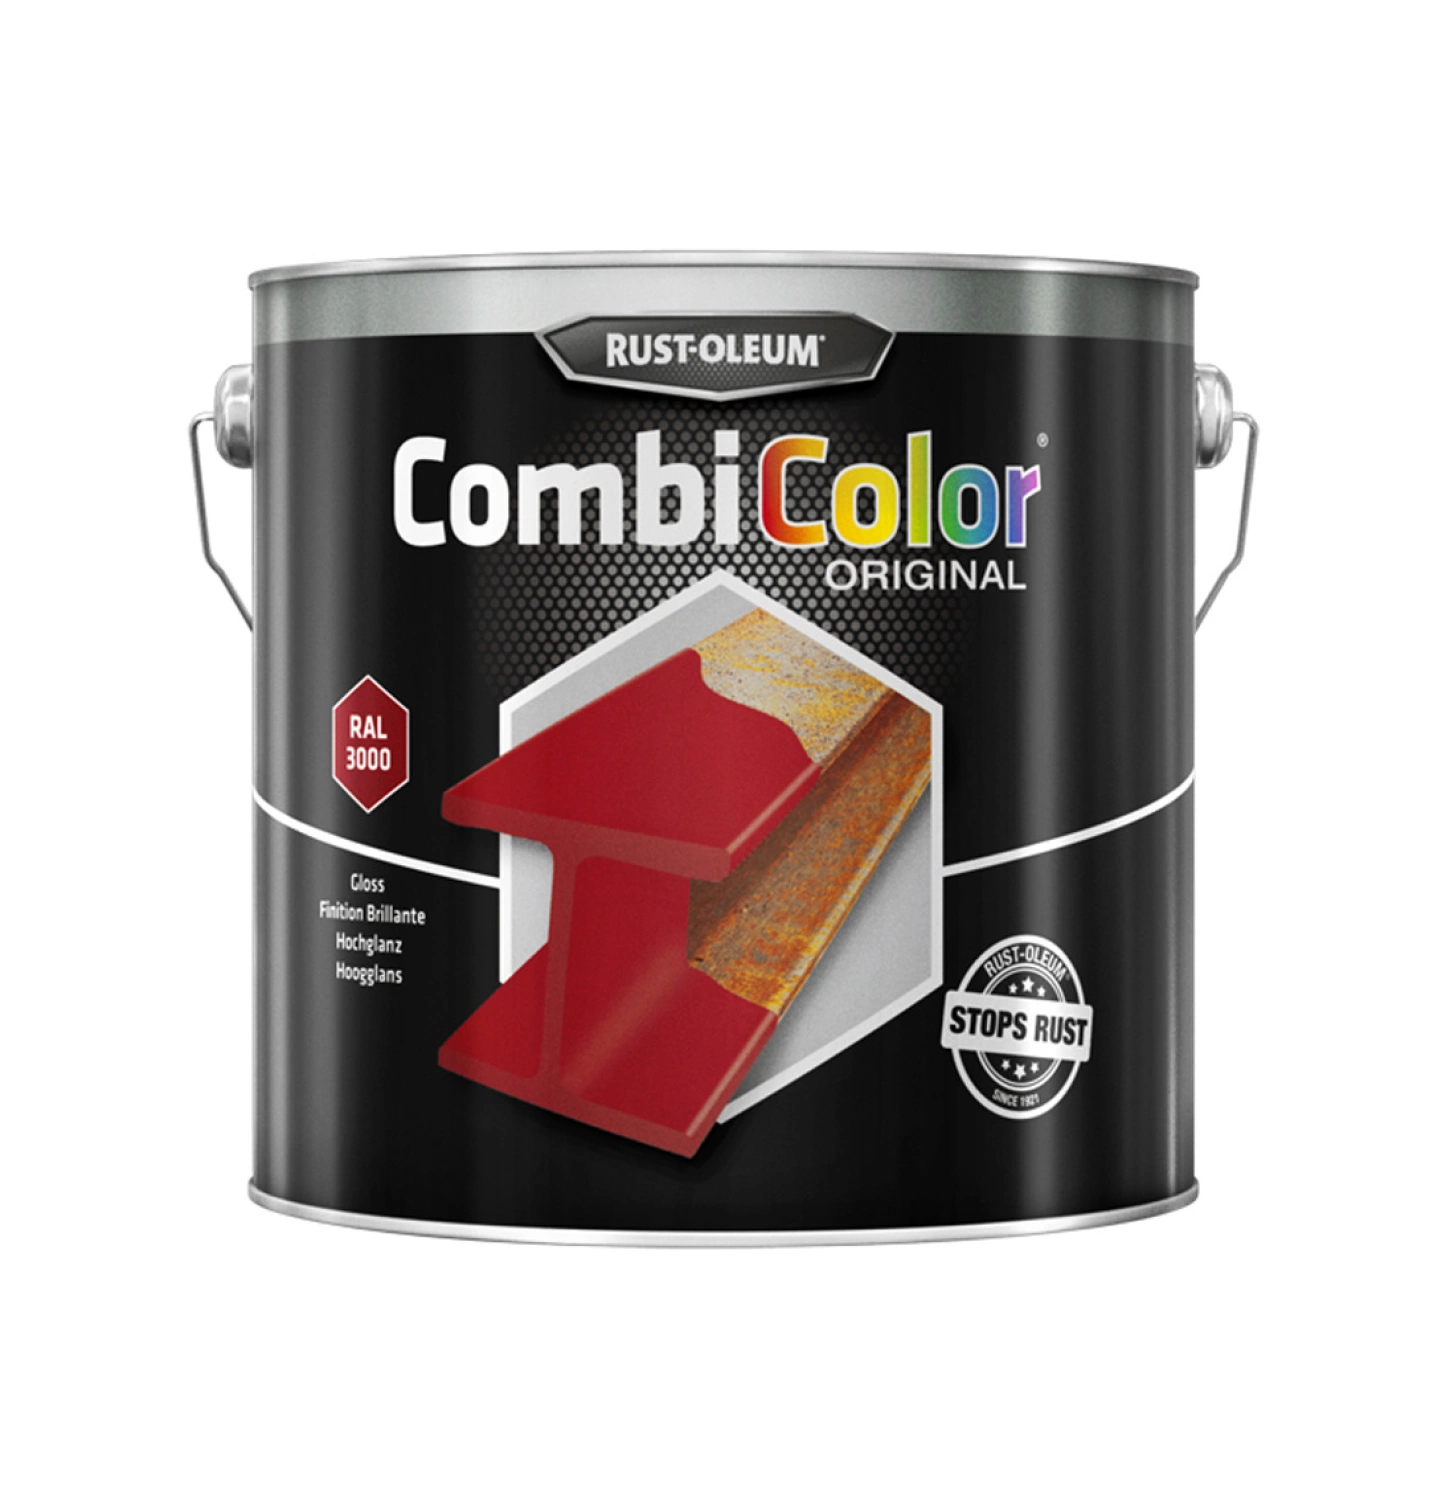 Rust-Oleum Combicolor Hoogglans - RAL 3000 vuurrood - 2,5L-image